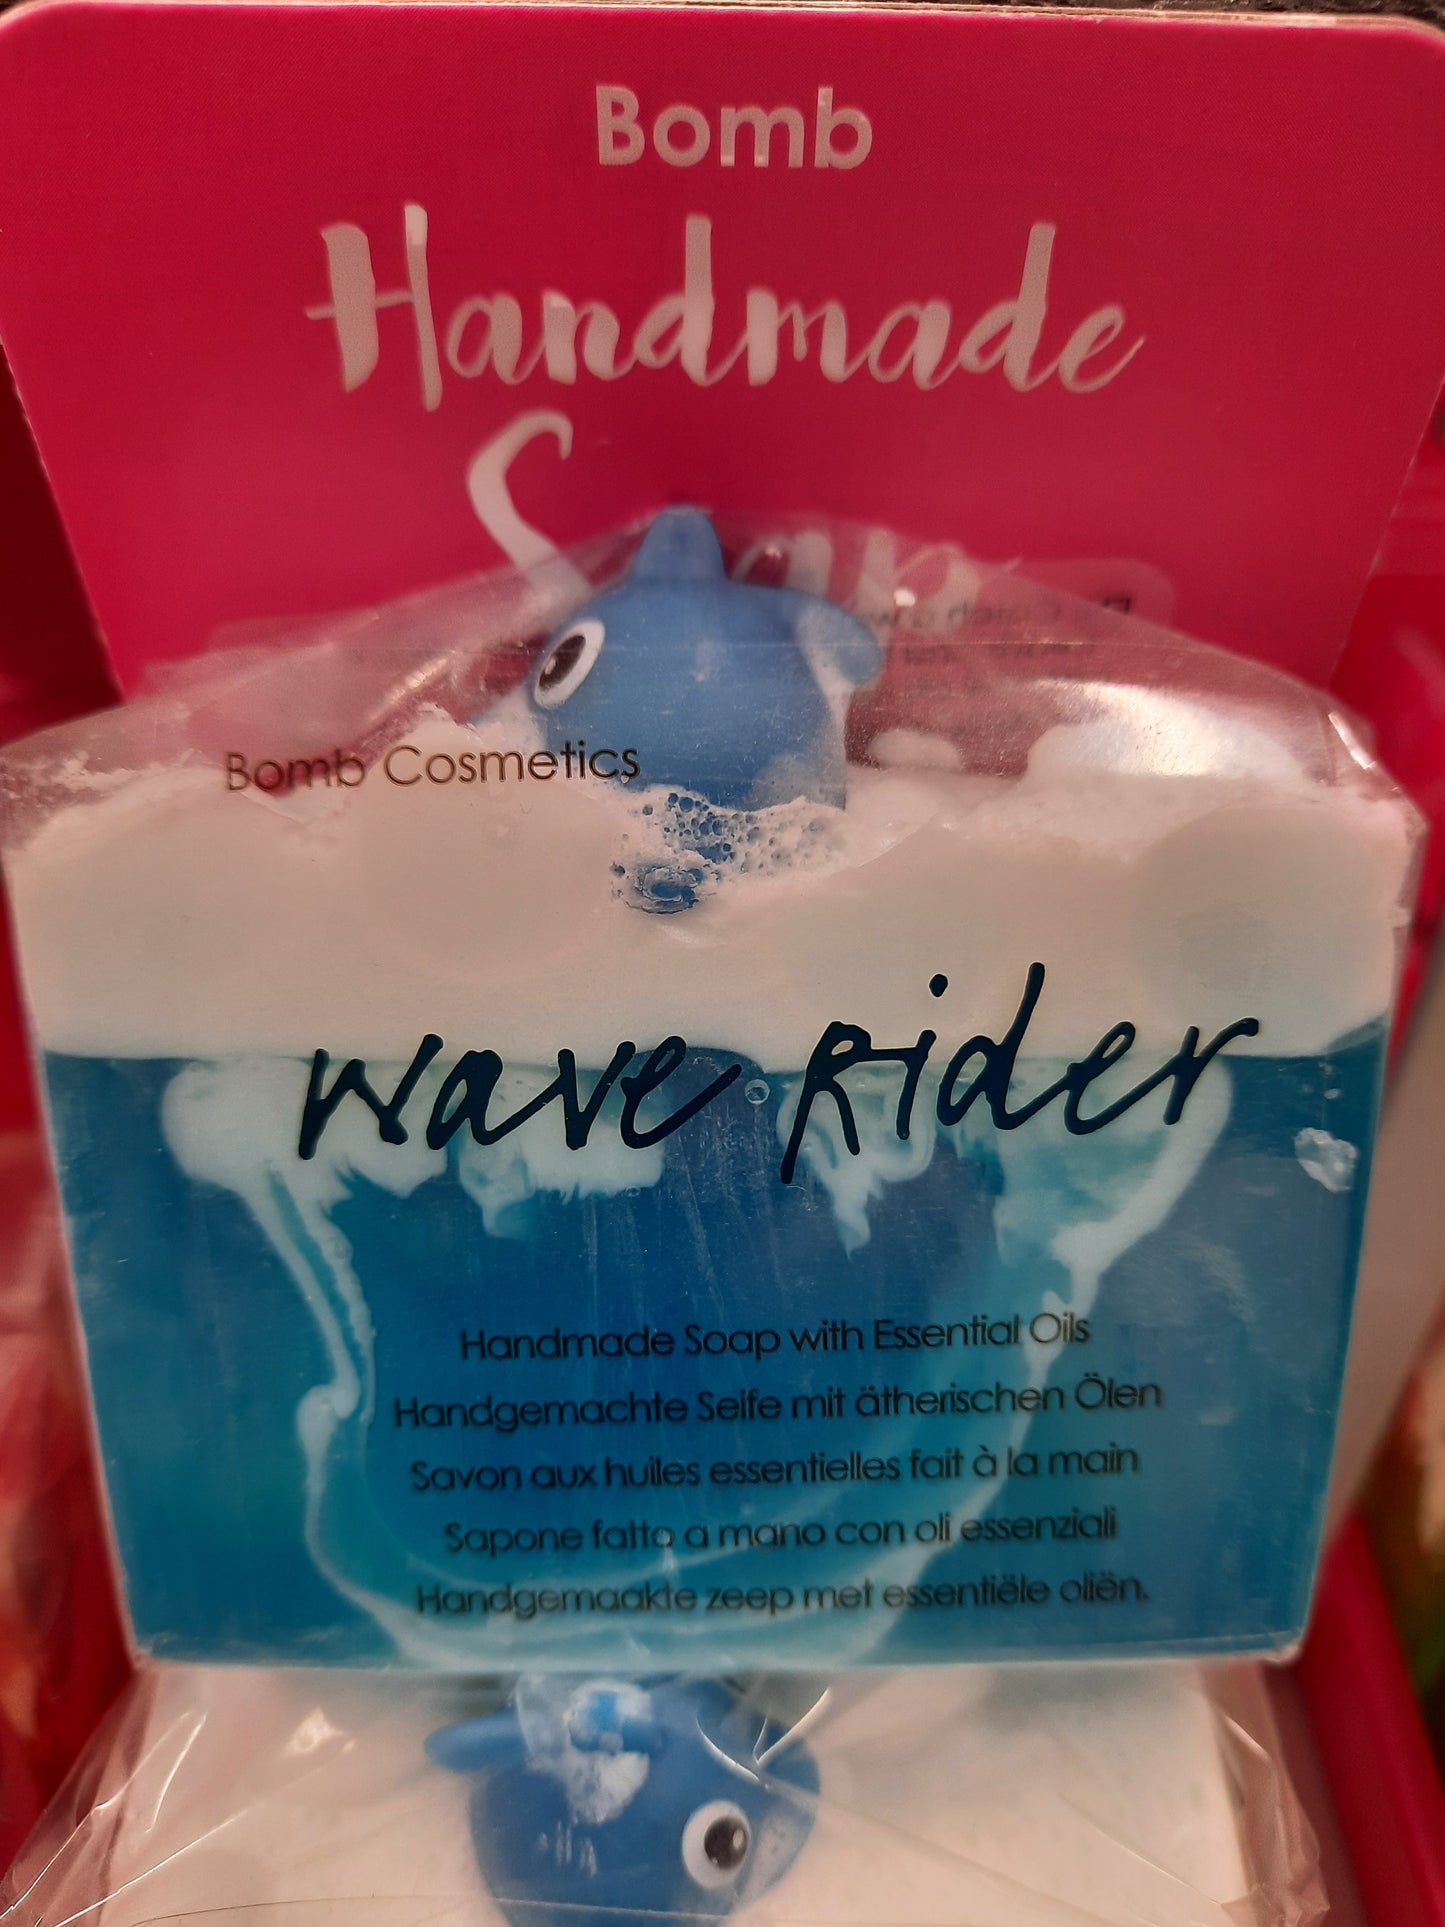 Wave Rider Handmade Soap